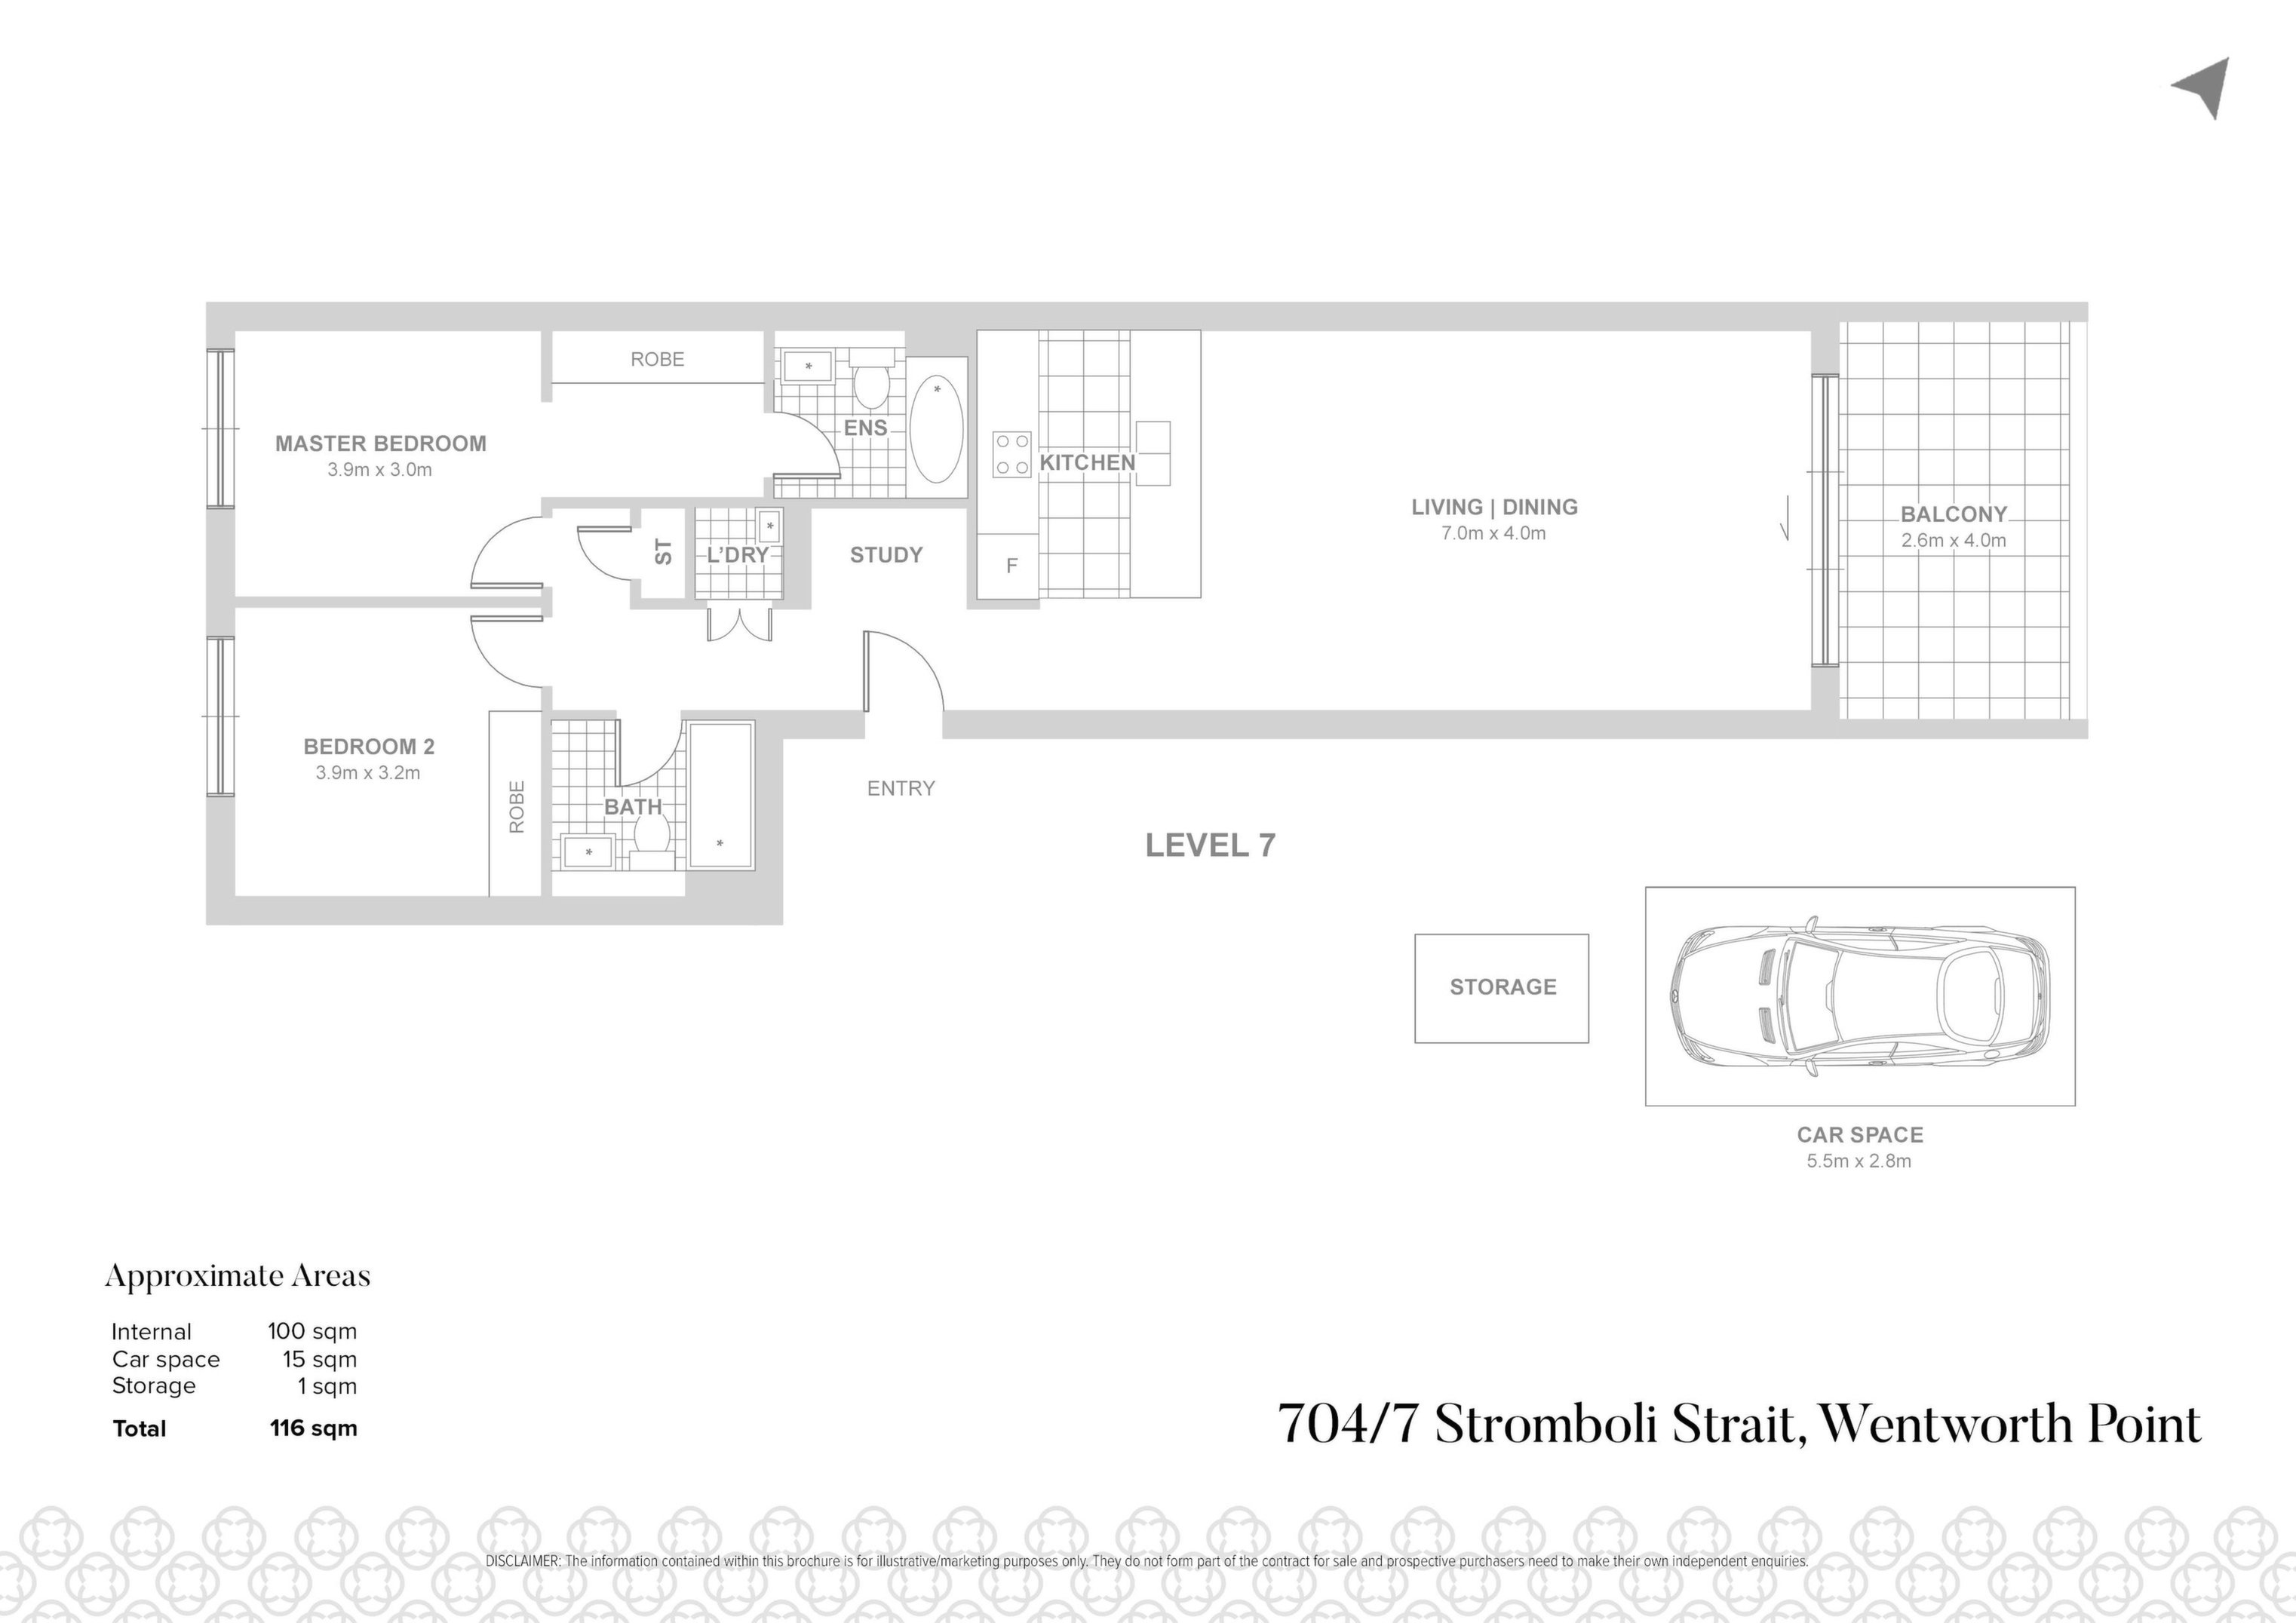 704/7 Stromboli Strait, Wentworth Point Sold by Chidiac Realty - floorplan